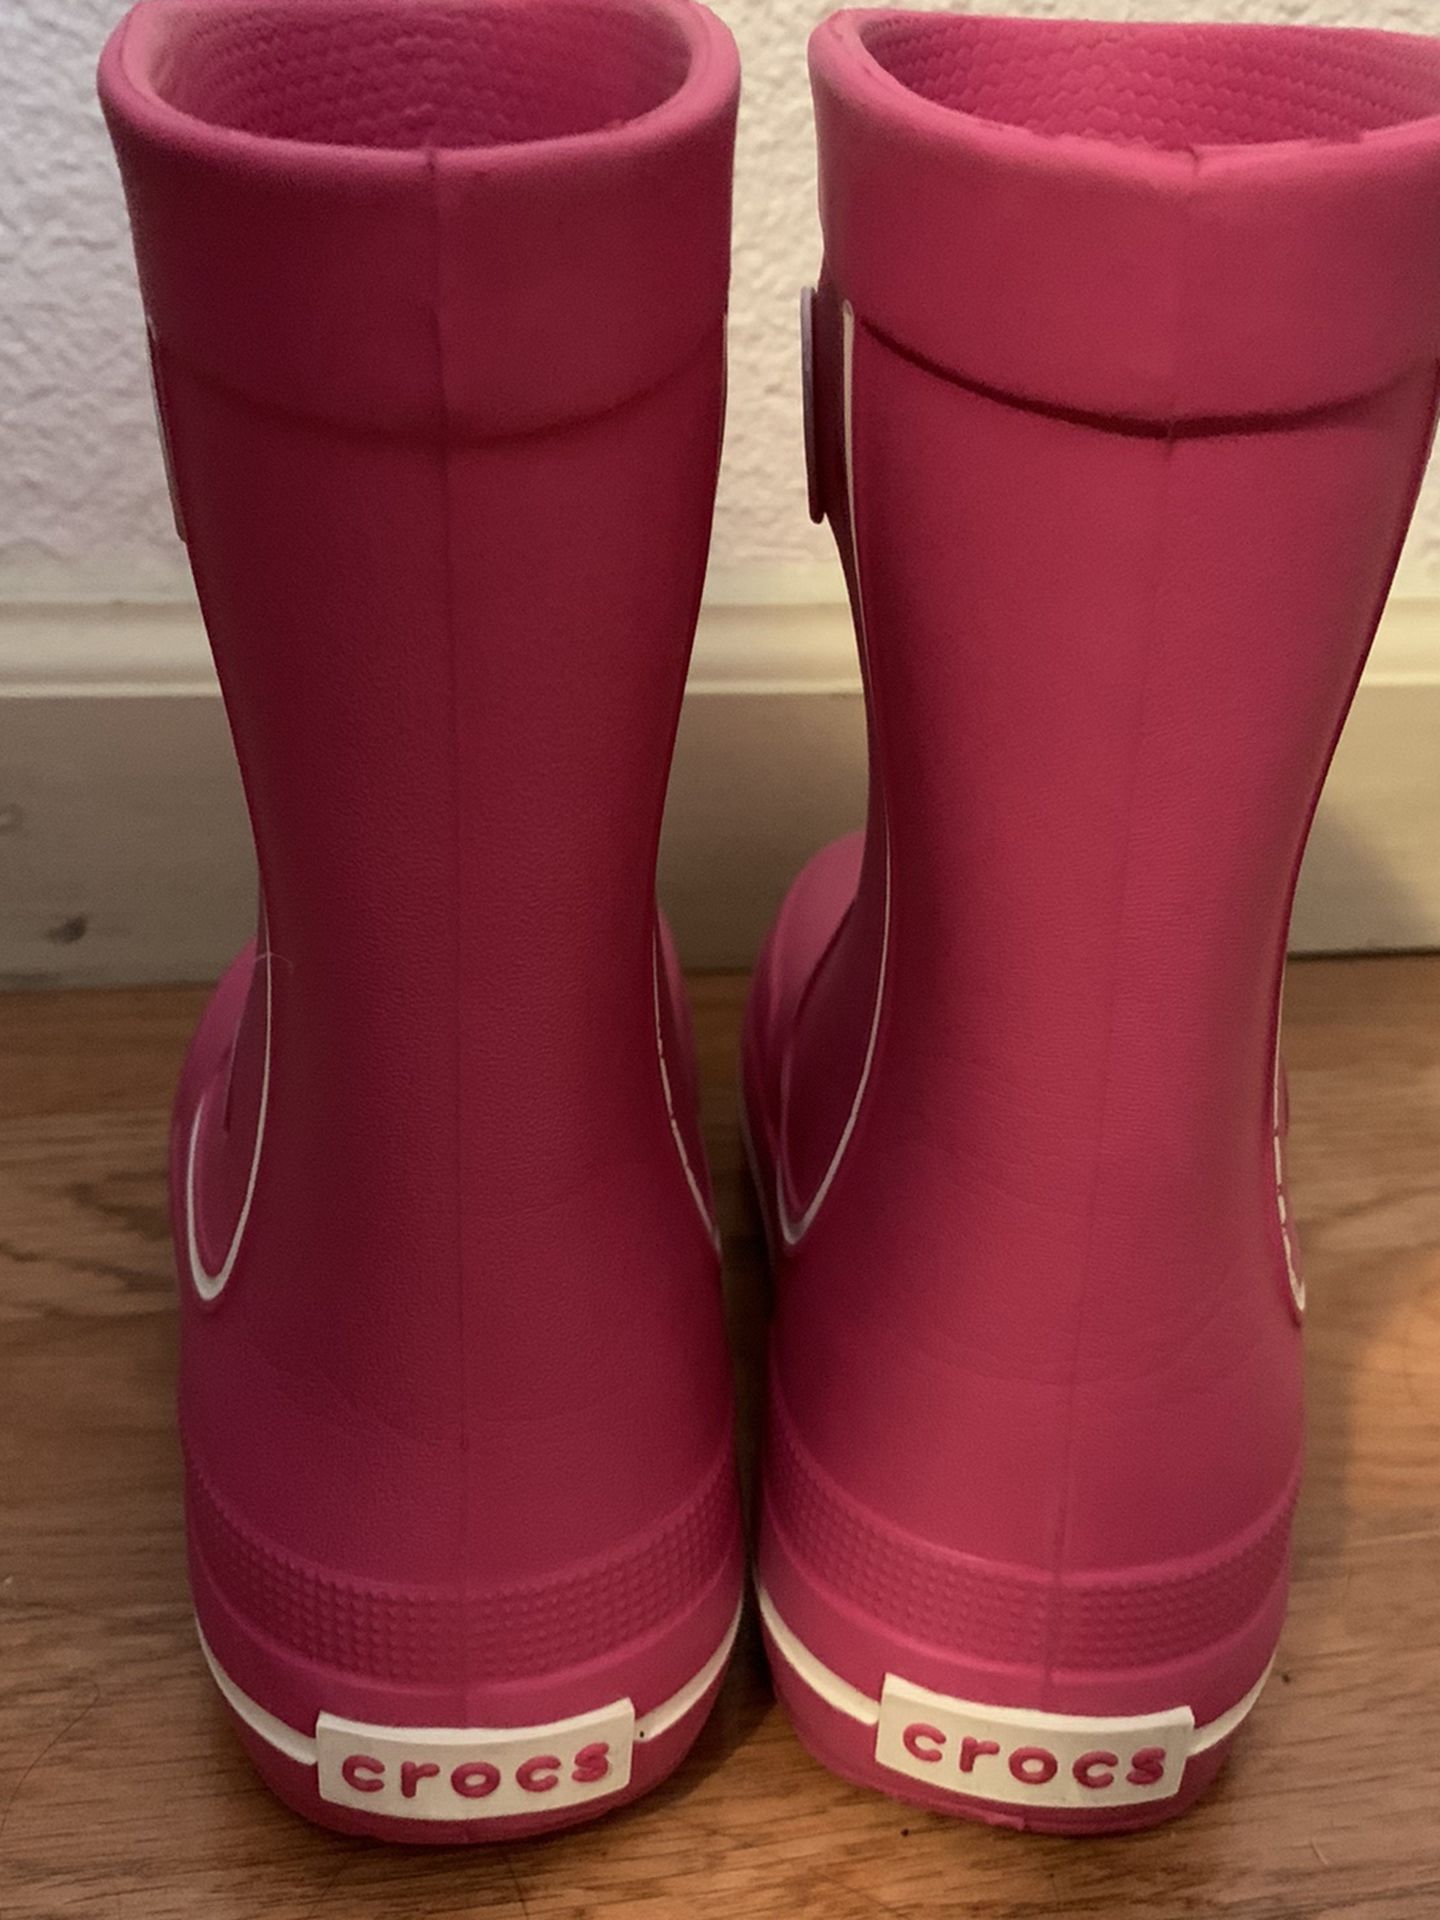 Girls Crocks Rain Boots Pink Size 12/13